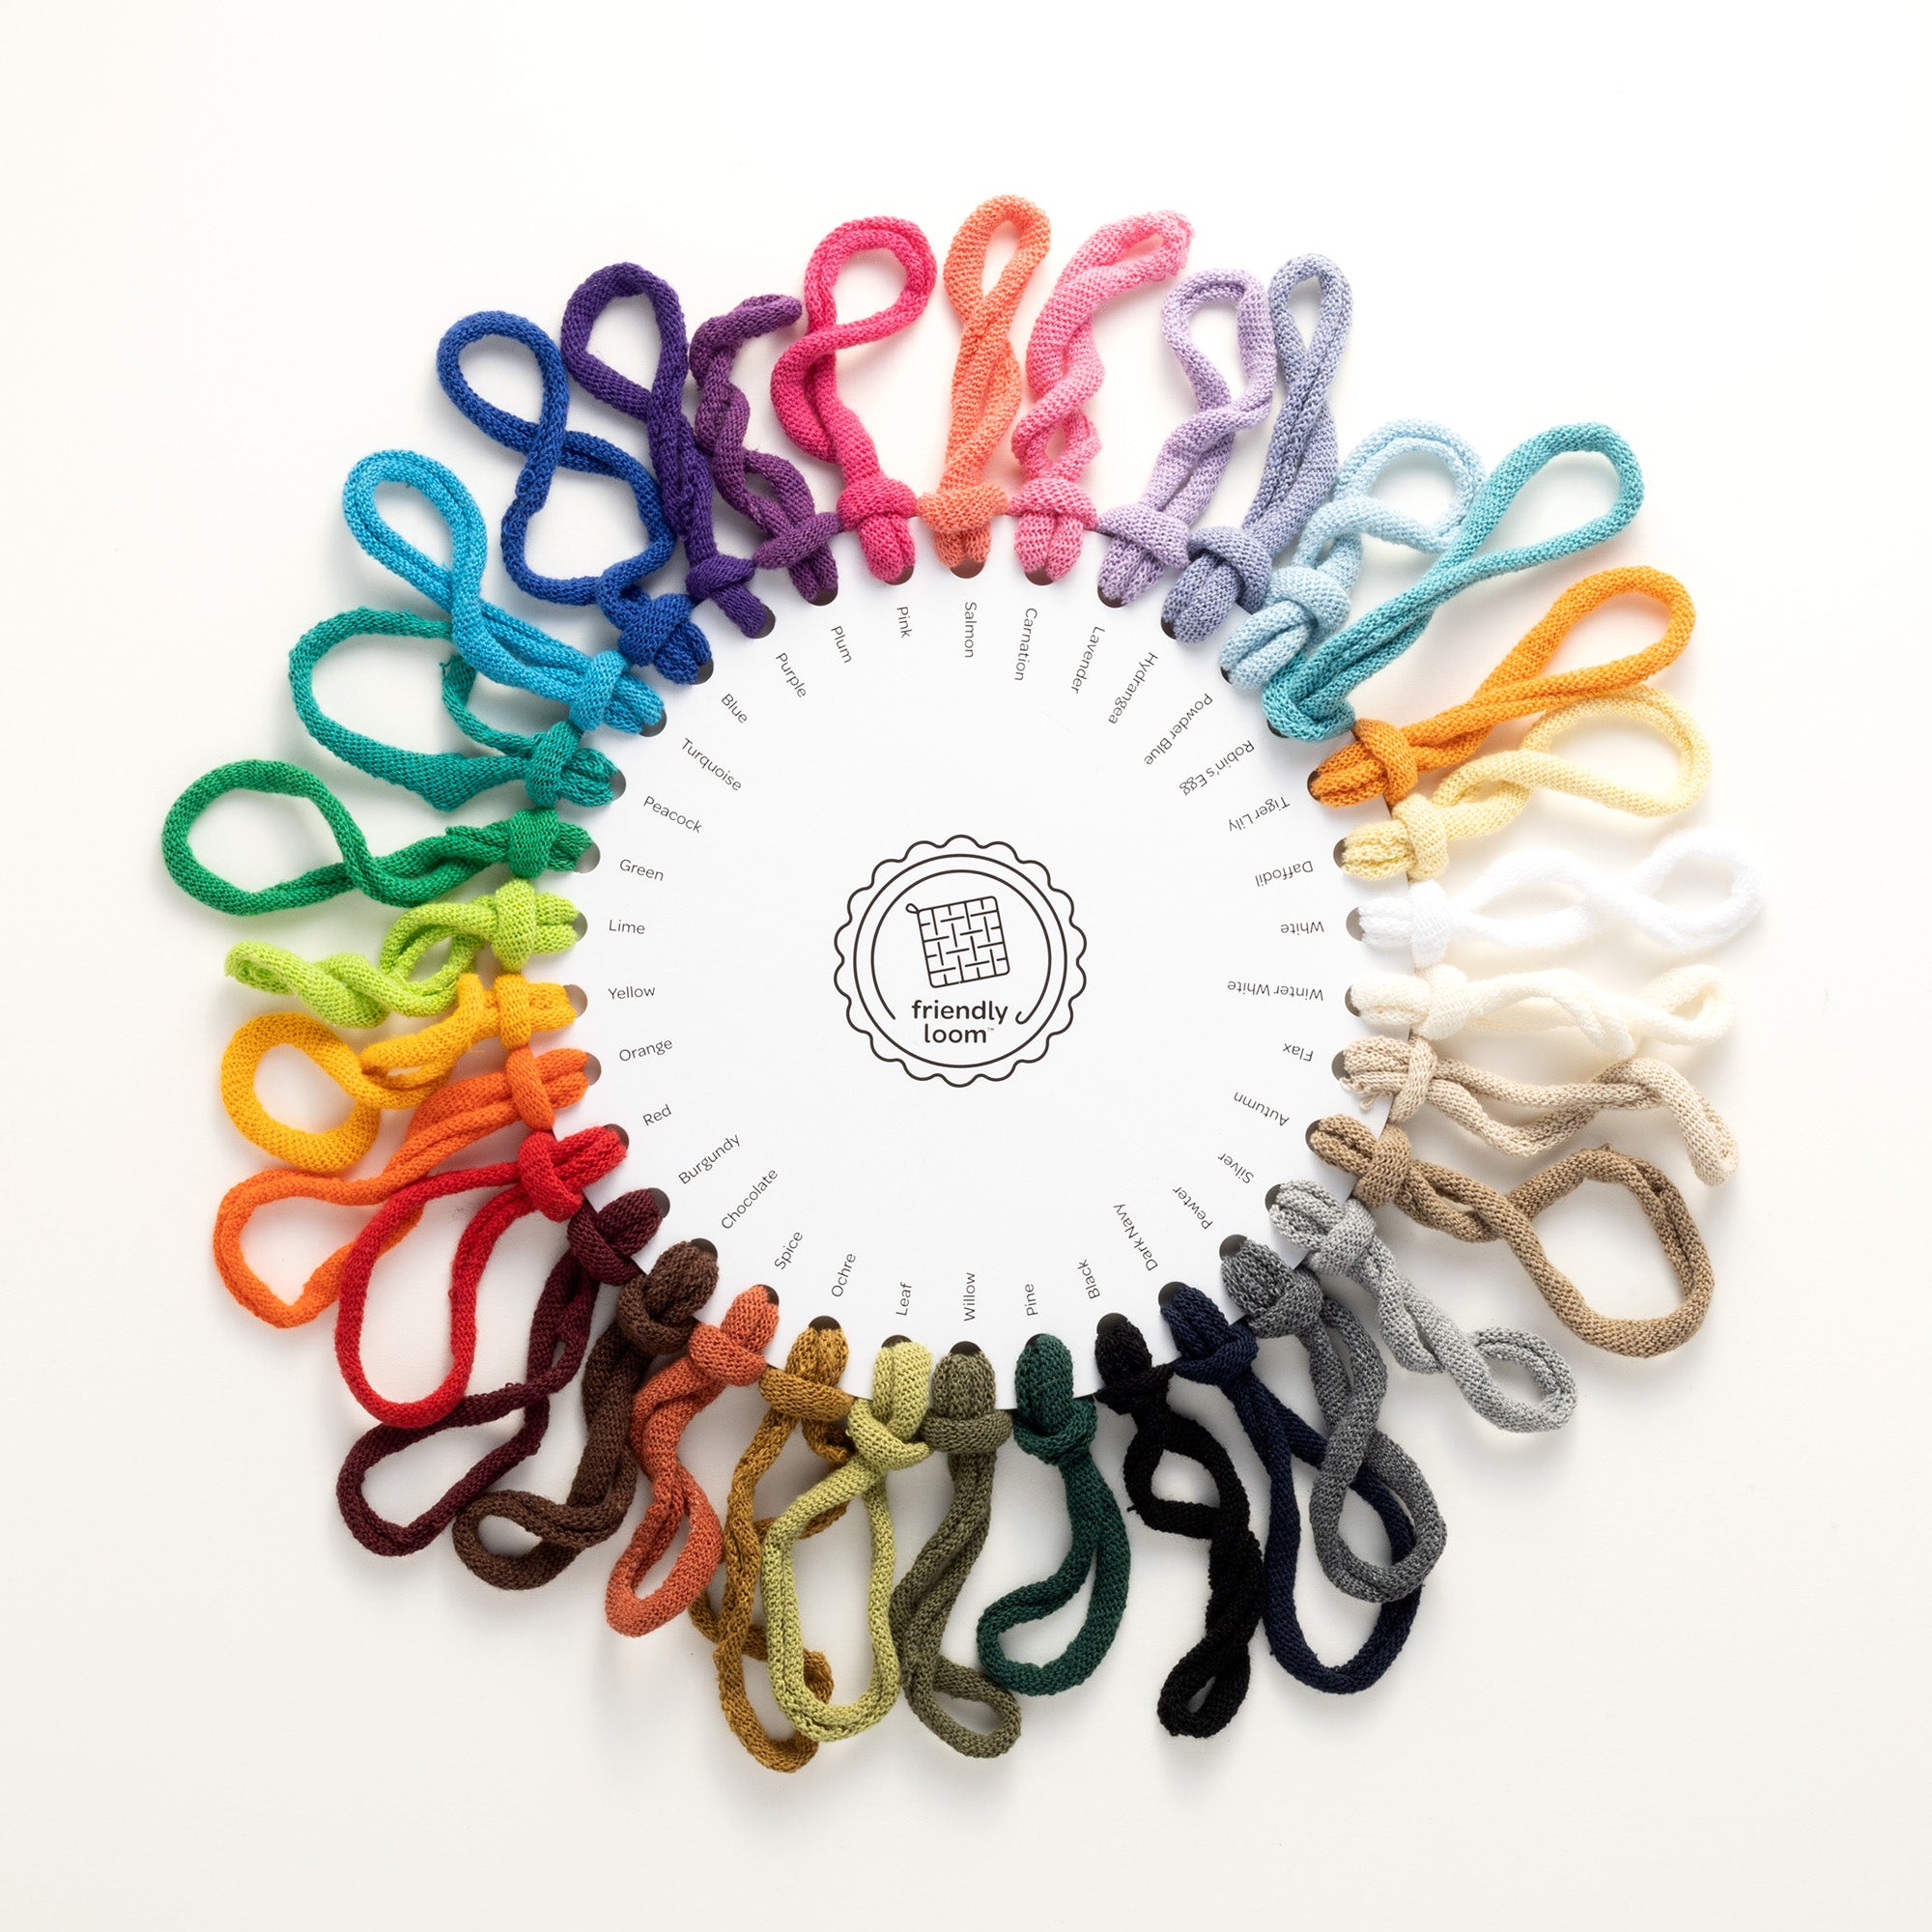 PRO Wool Potholder/Trivet Loops - Solid Colors